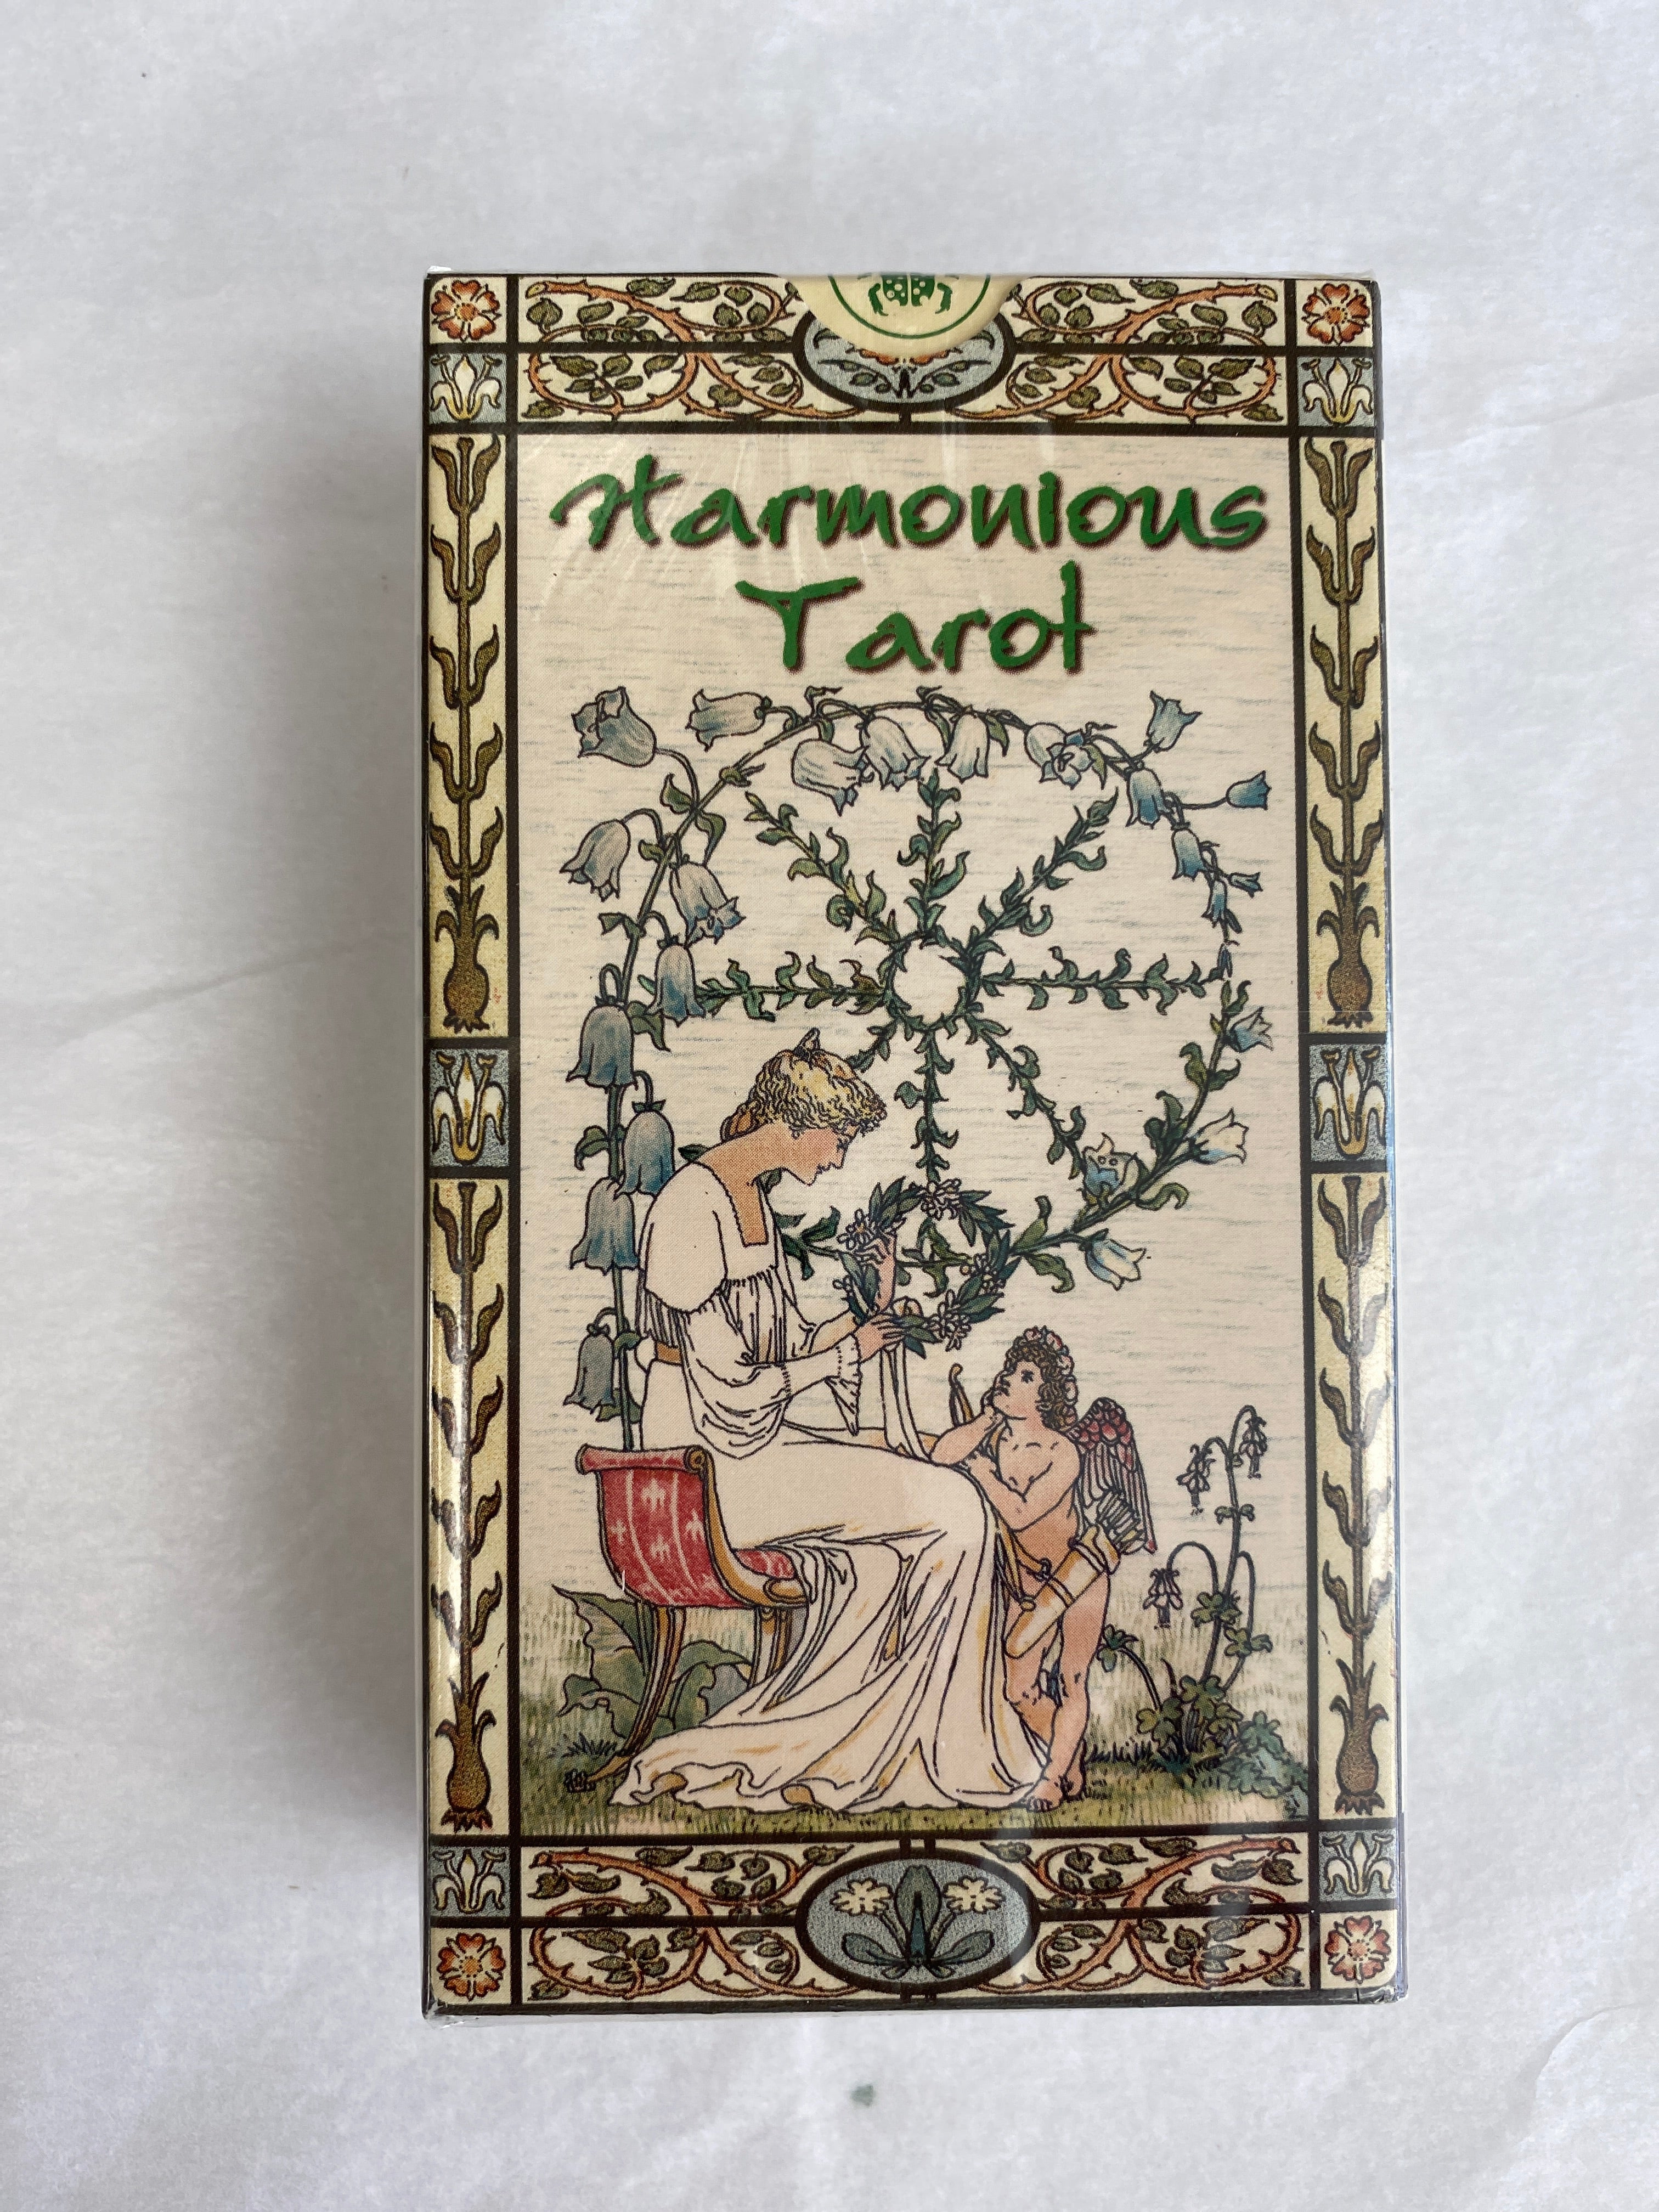 Harmonious Tarot